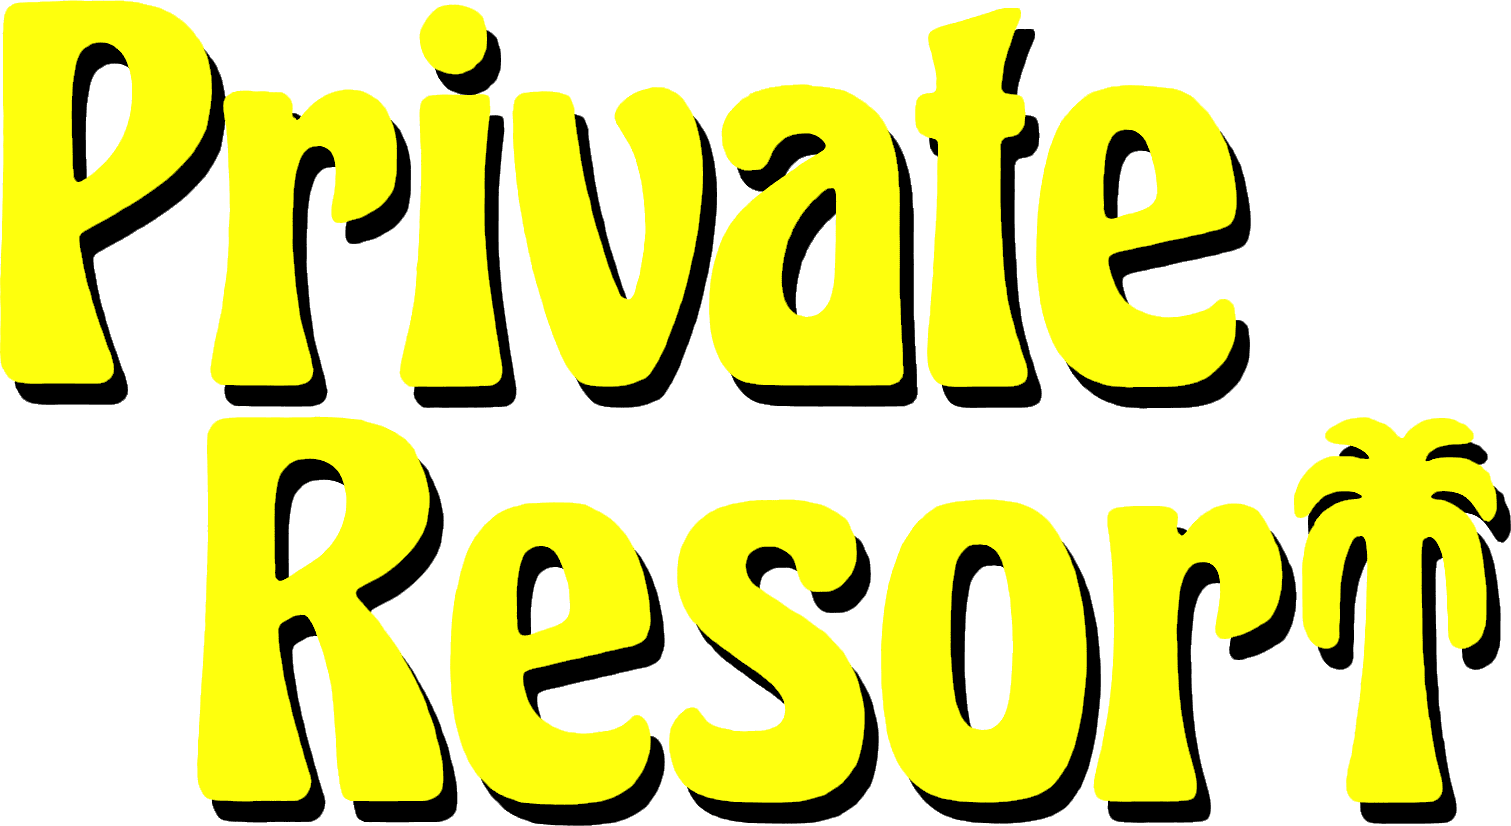 Private Resort logo